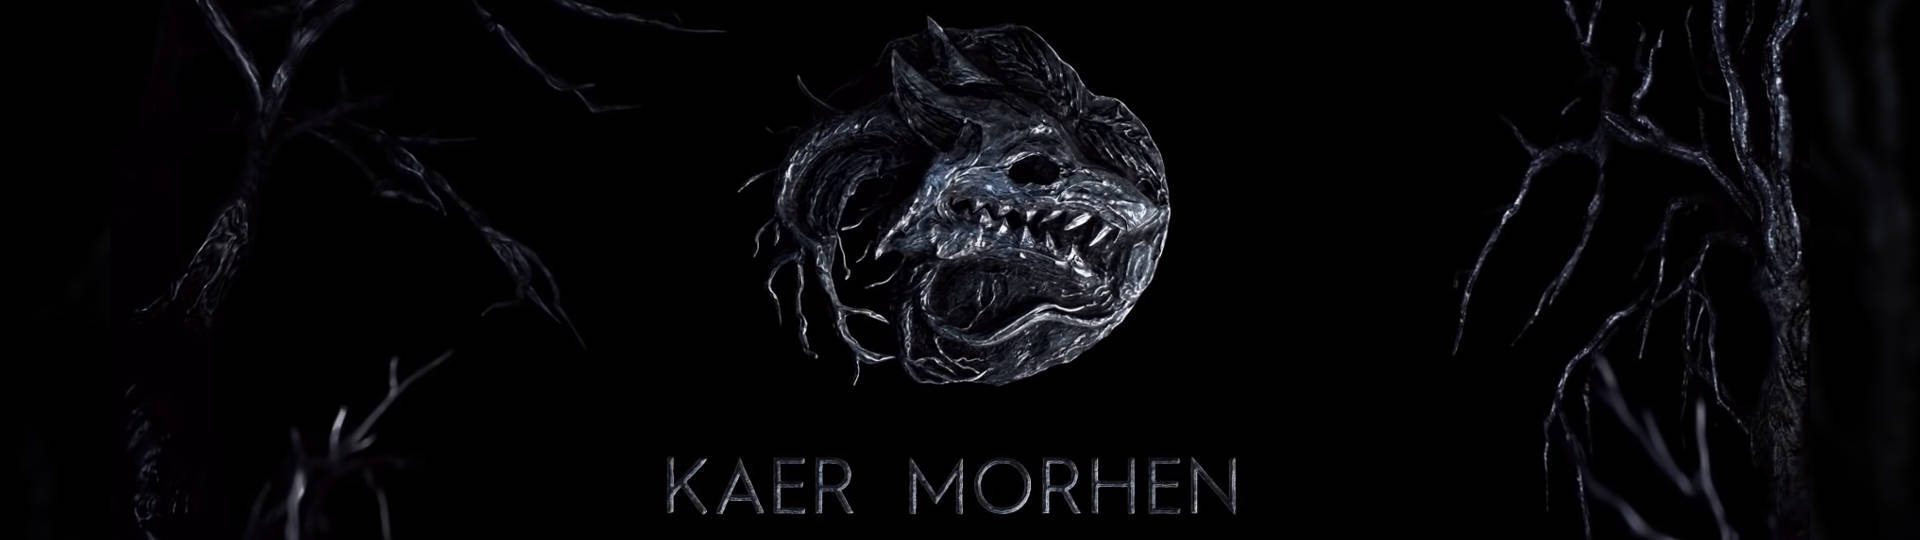 The Witcher 3 DLC Netflix Kaer Morhen slice